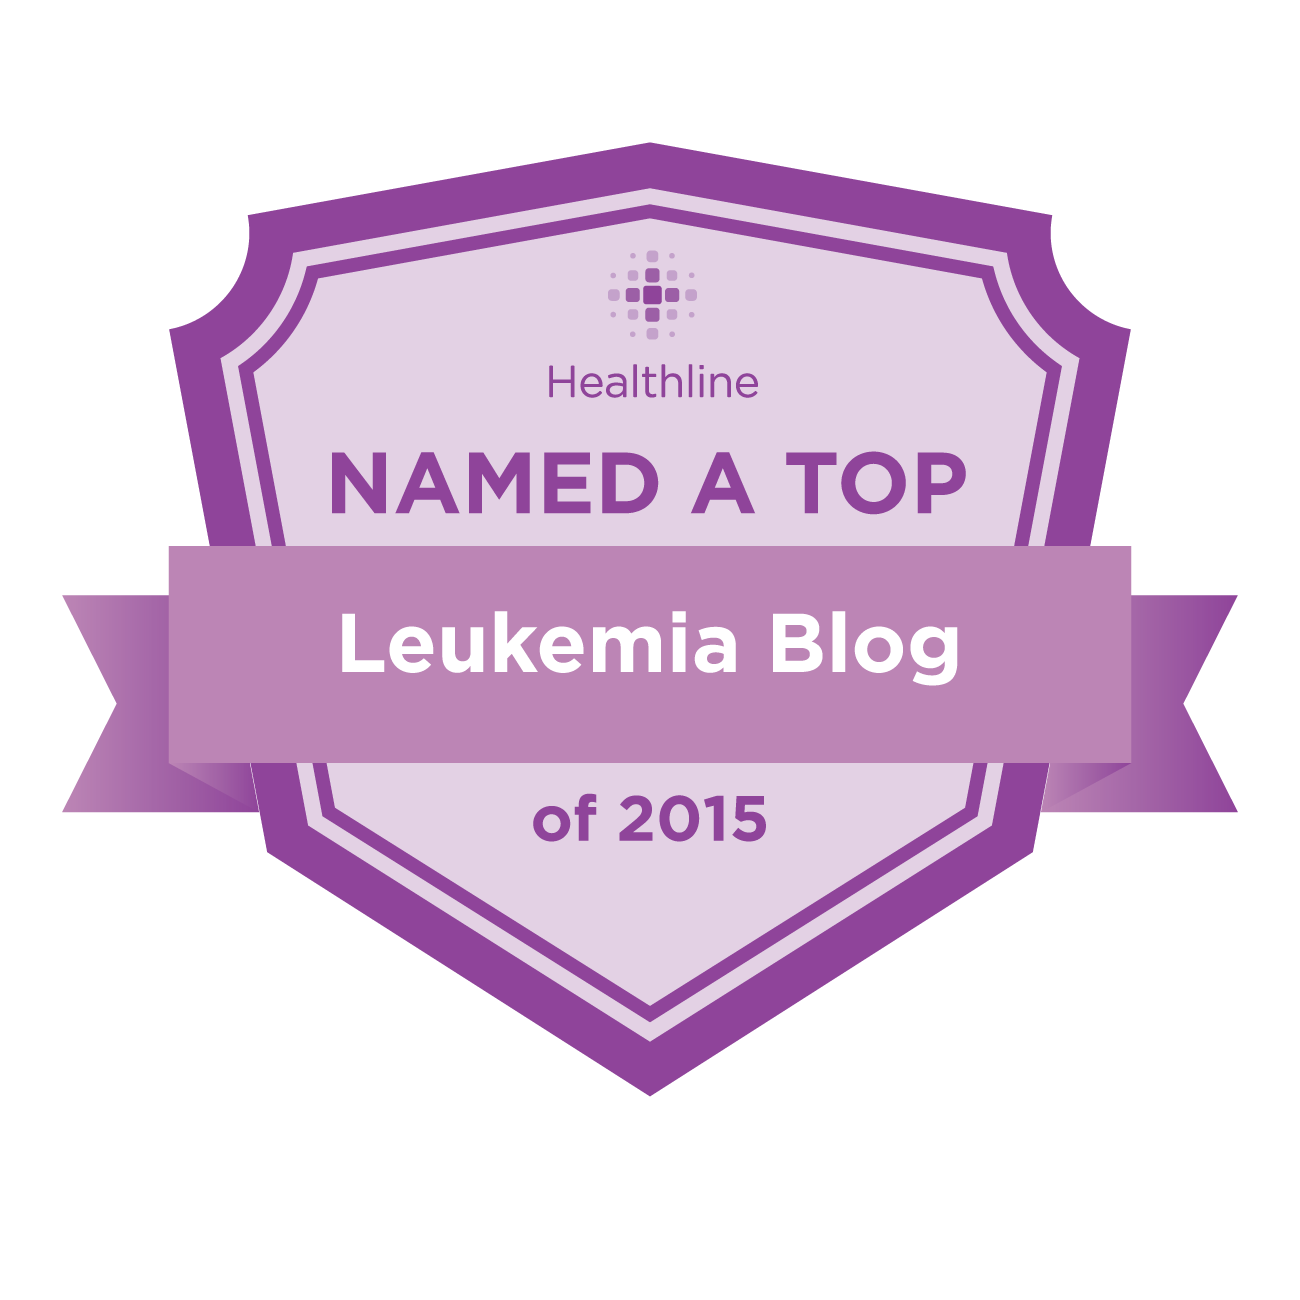 Healthline named this a top Leukemia Blog!